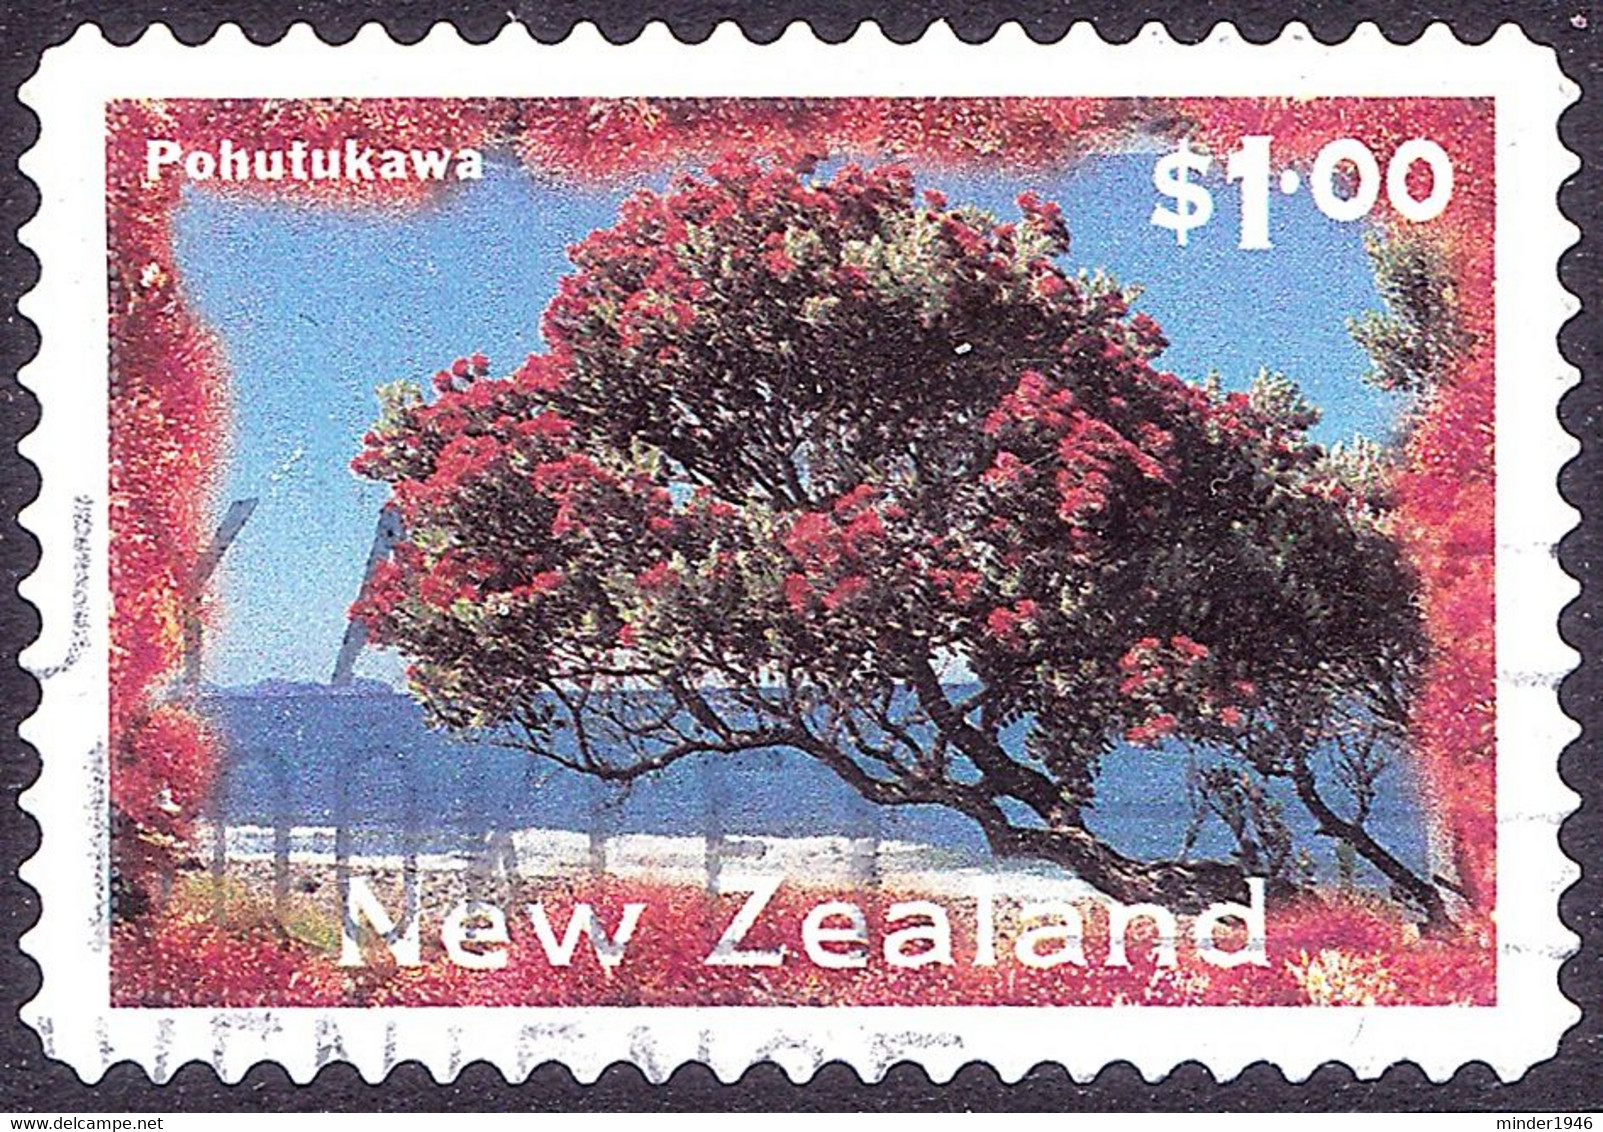 NEW ZEALAND 1996 QEII $1.00 New Zealand Scenery - Pohutukawa Tree SG1991 Used - Gebruikt